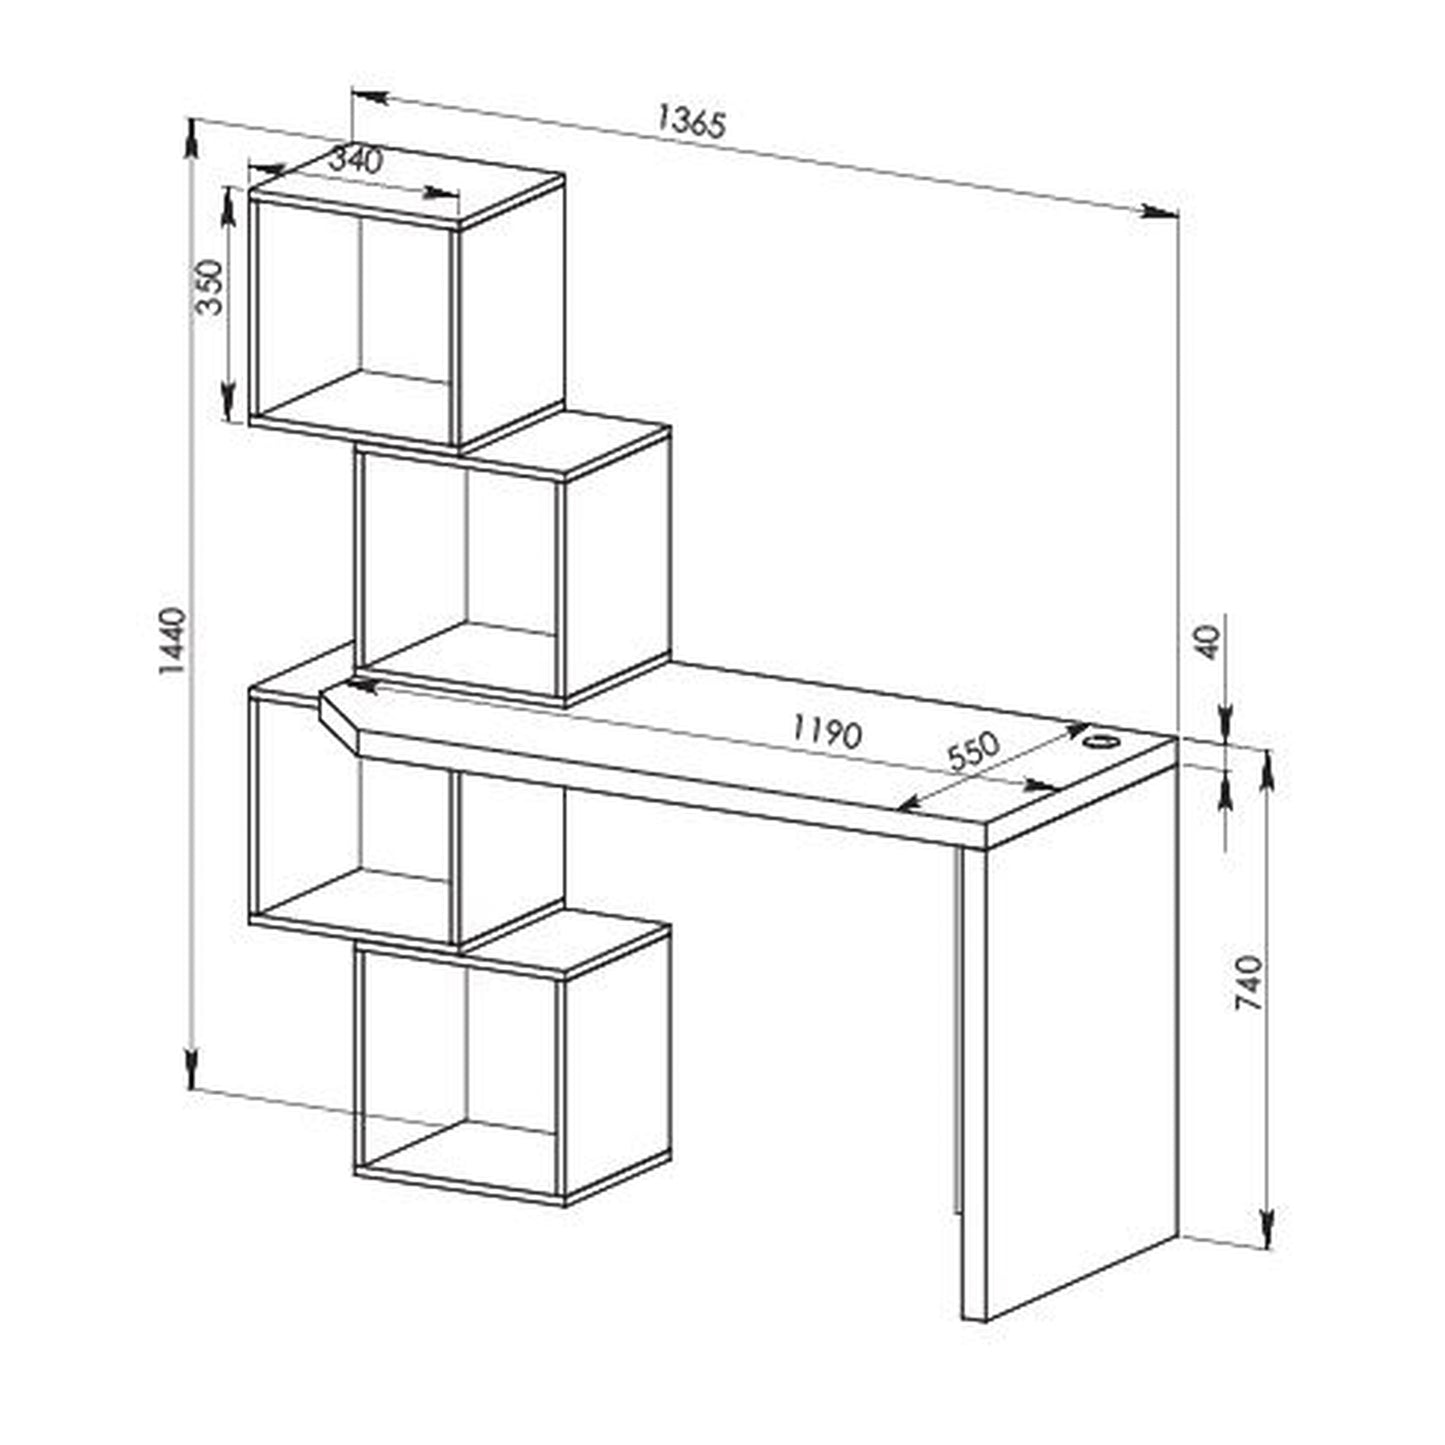 Criterion Interlace Desk 1340mm, Built in Shelf Unit, Oak